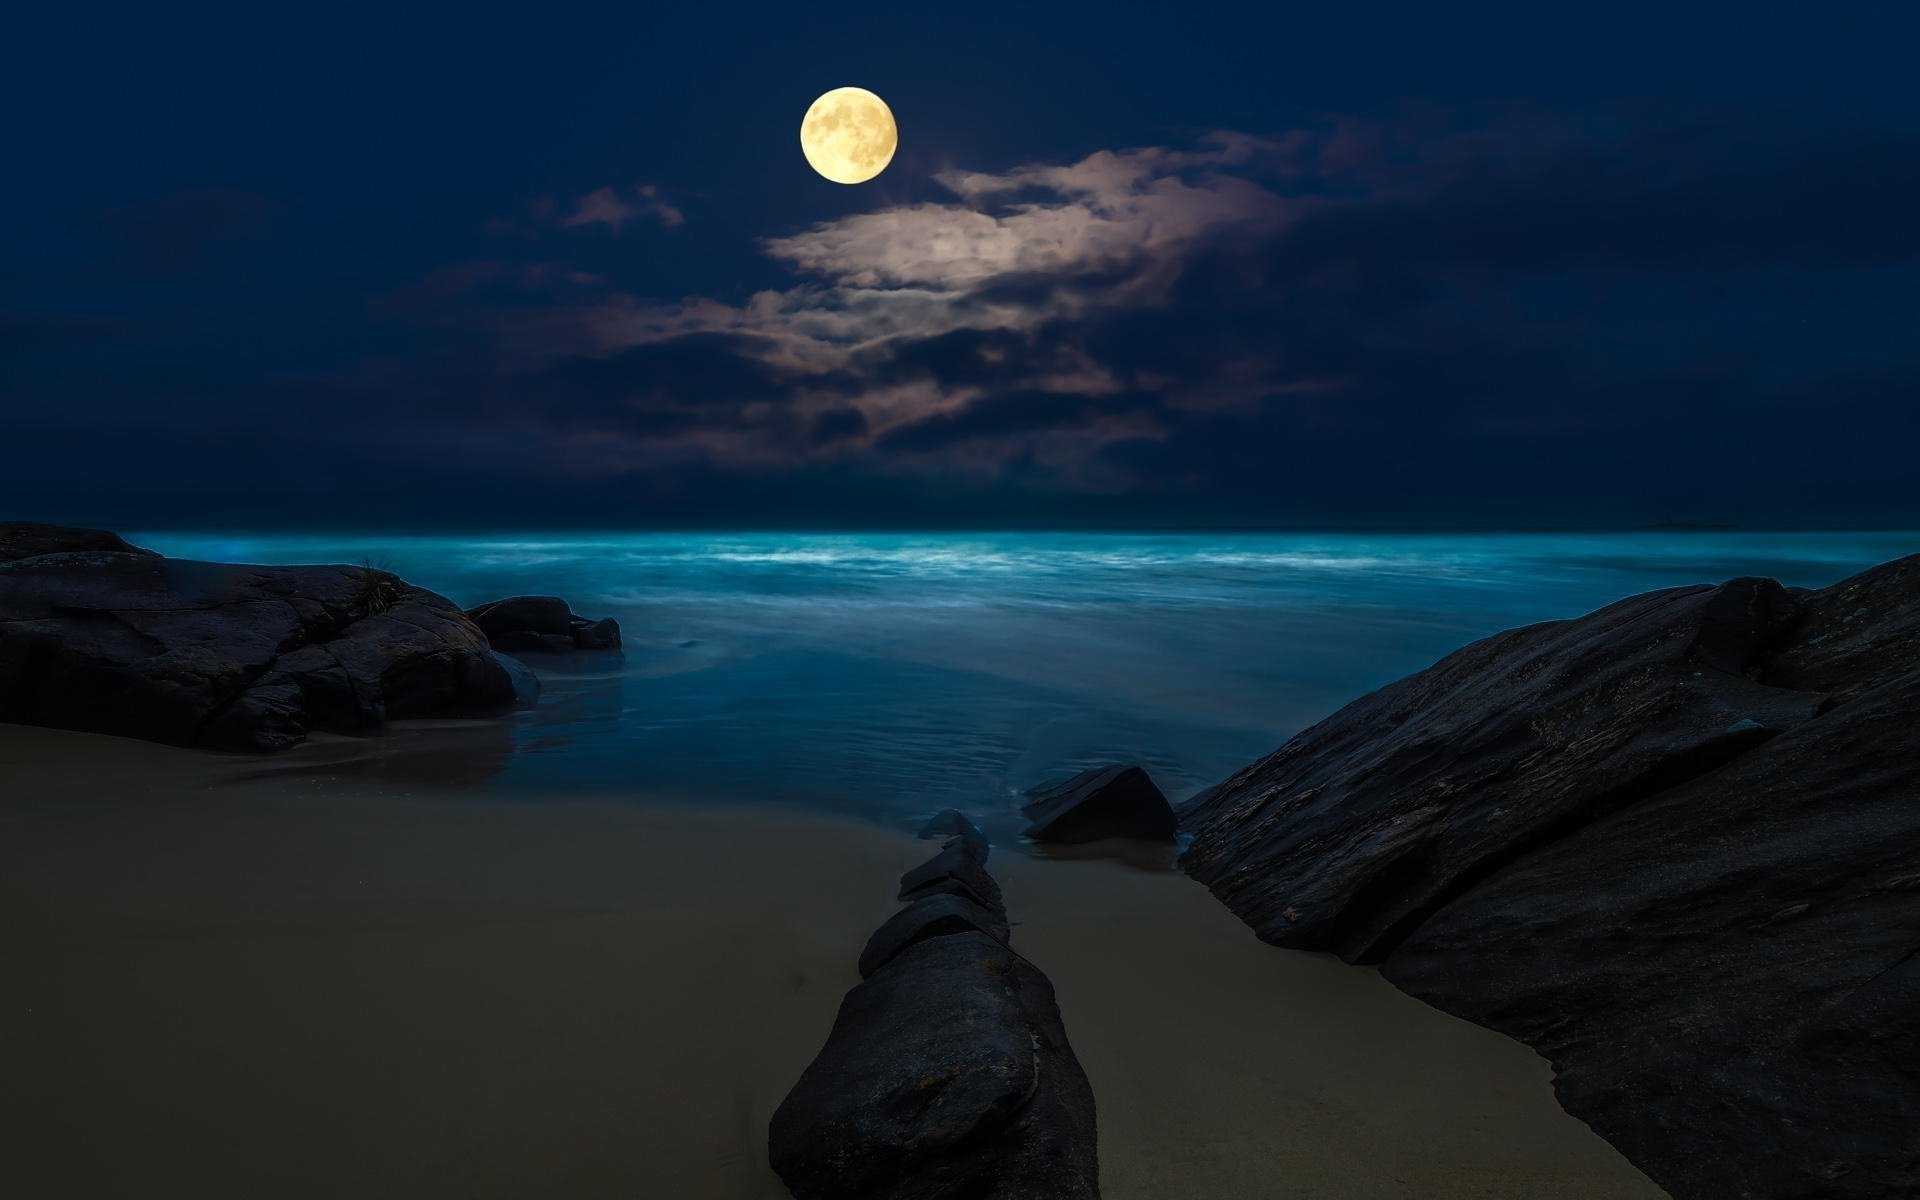 Beach Night Moon